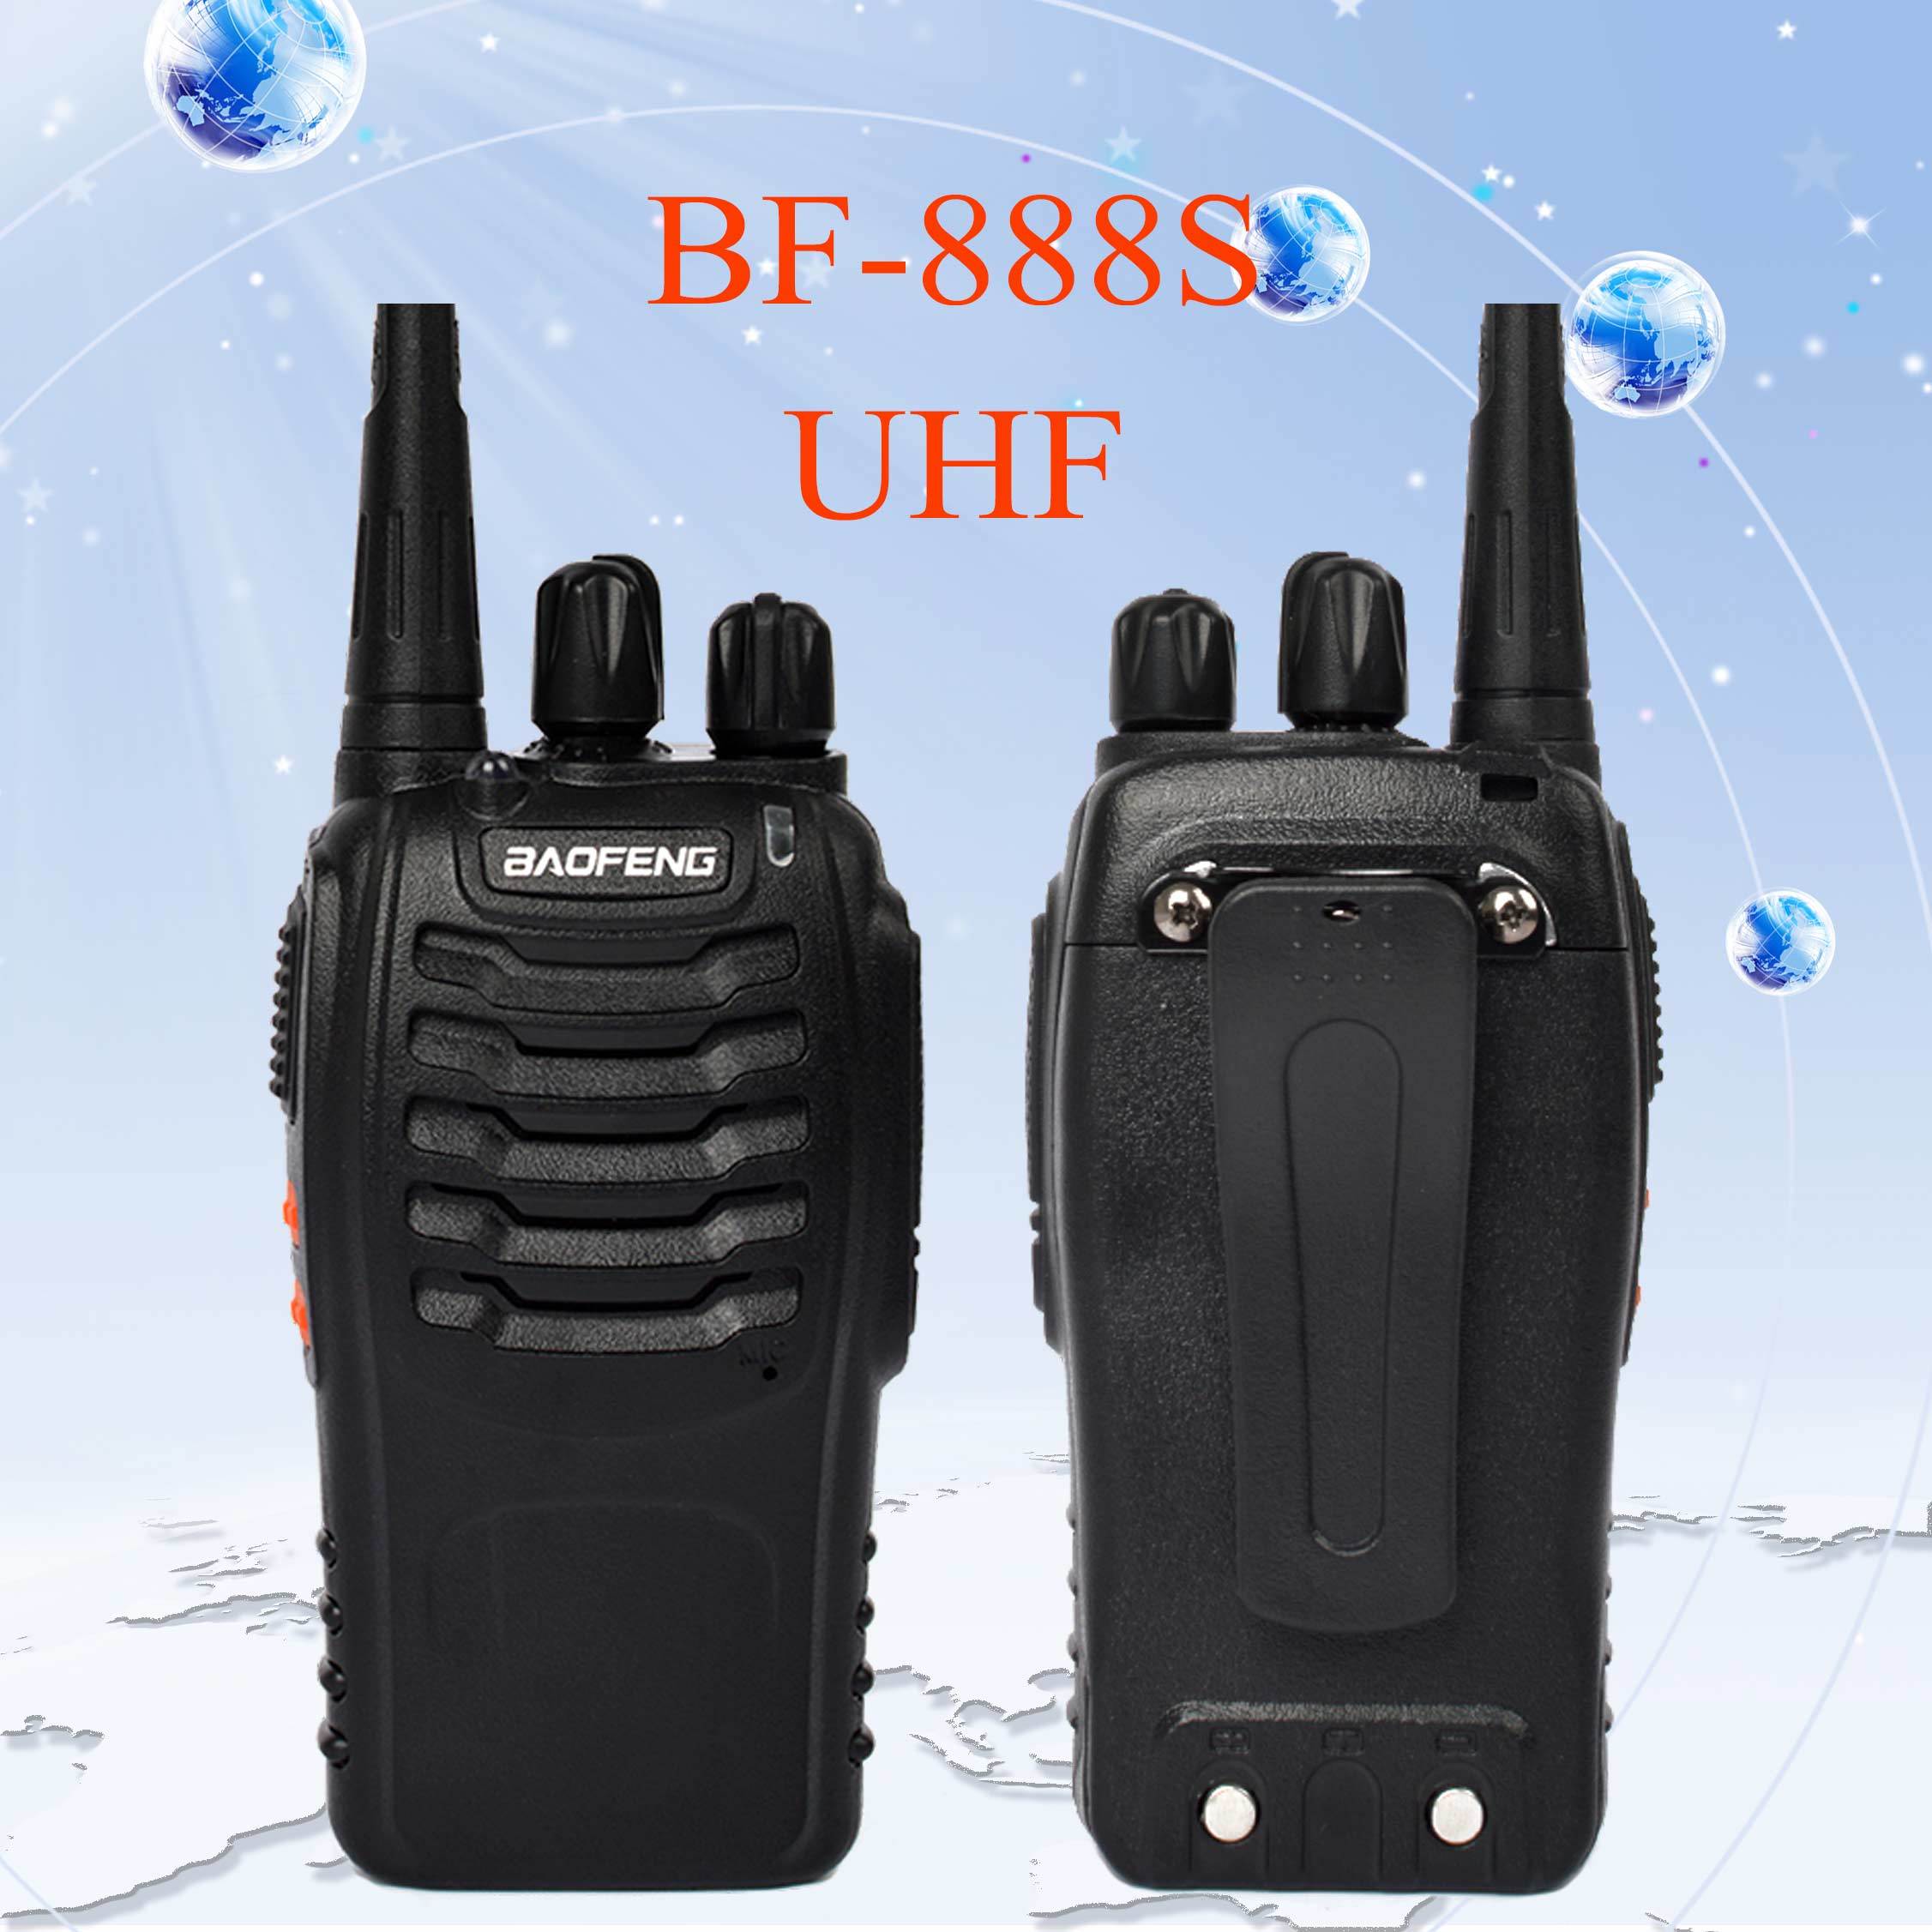 Cheapest Long Range UHF Baofeng Handheld Two Way Radio Bf-888s